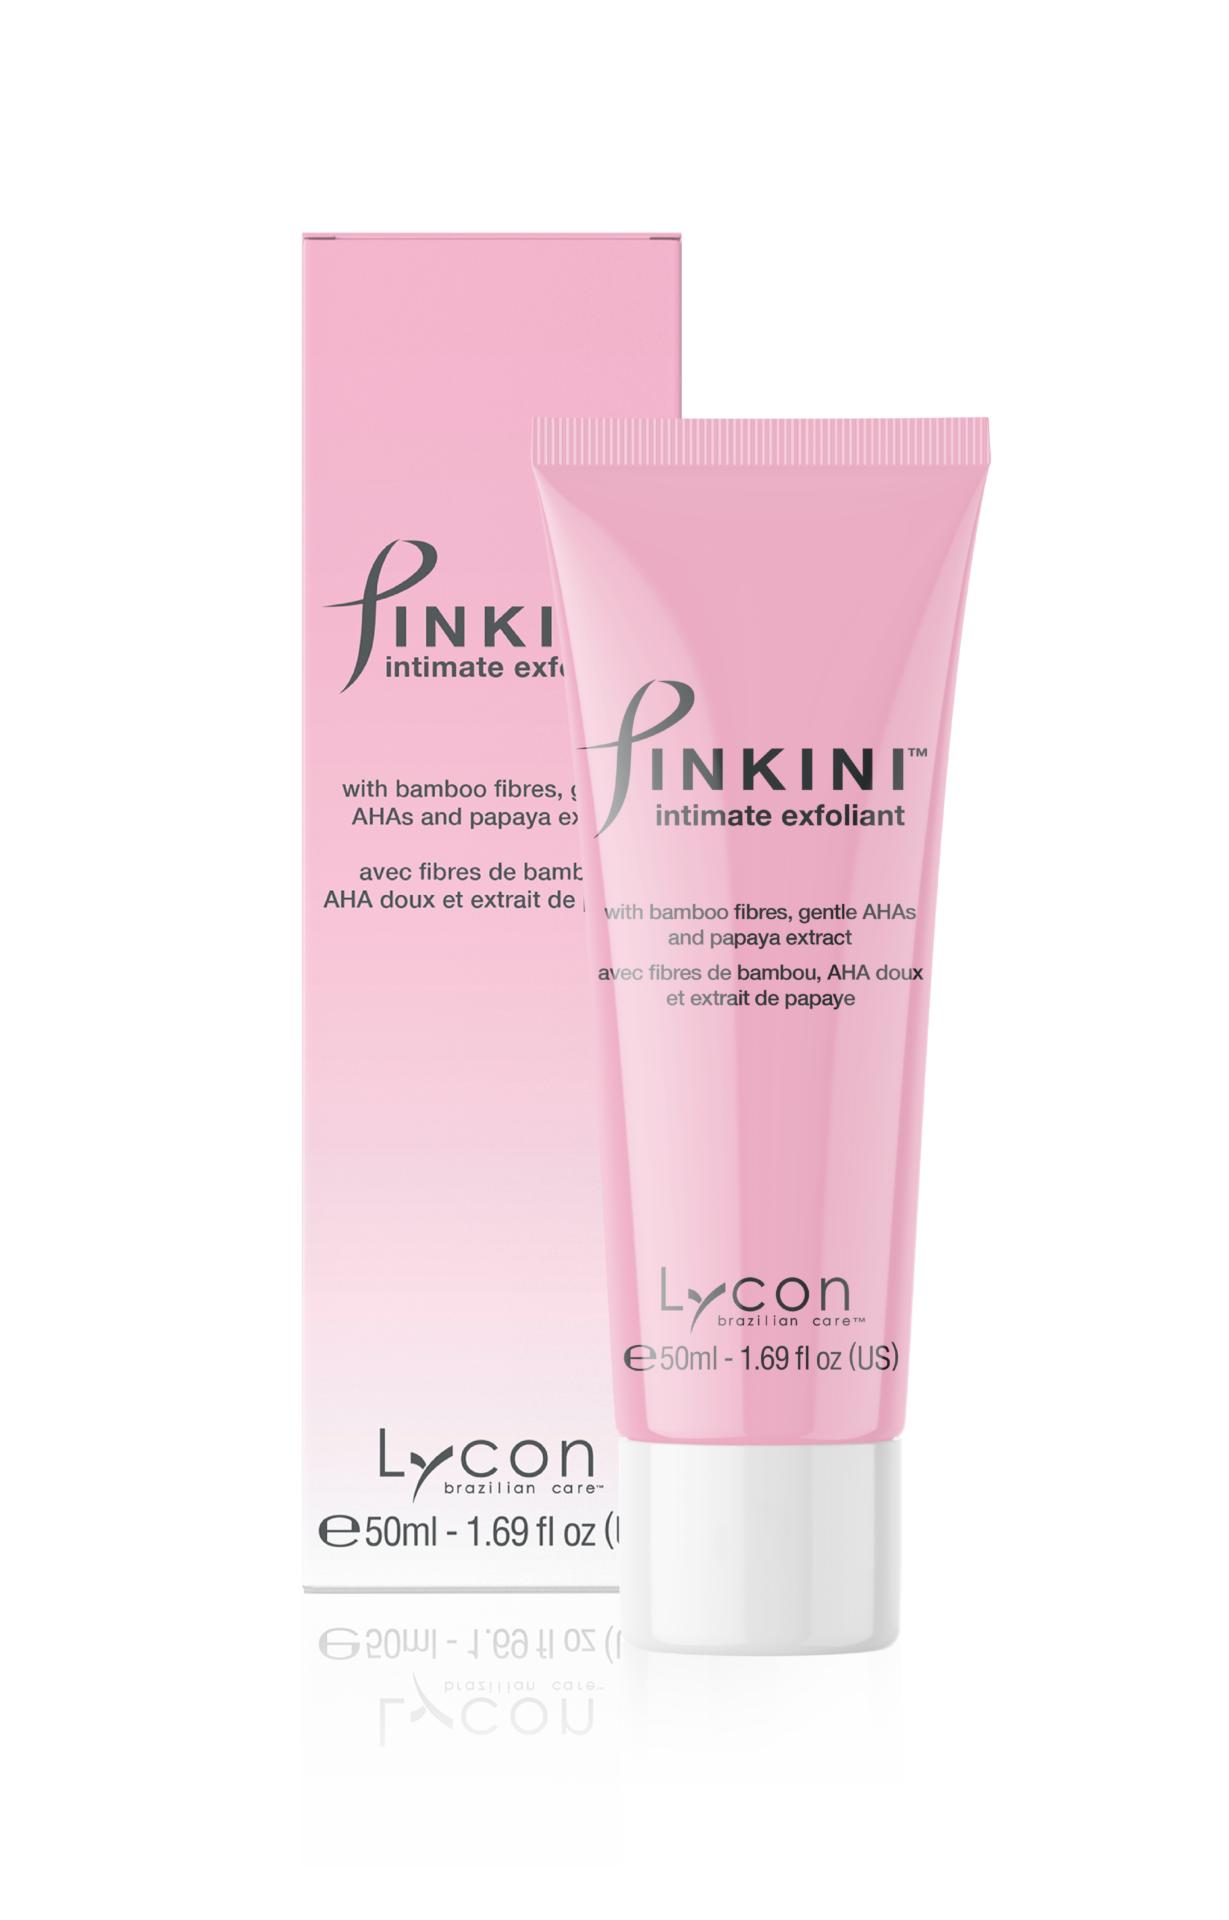 LYCON Pinkini Intimate Exfoliant